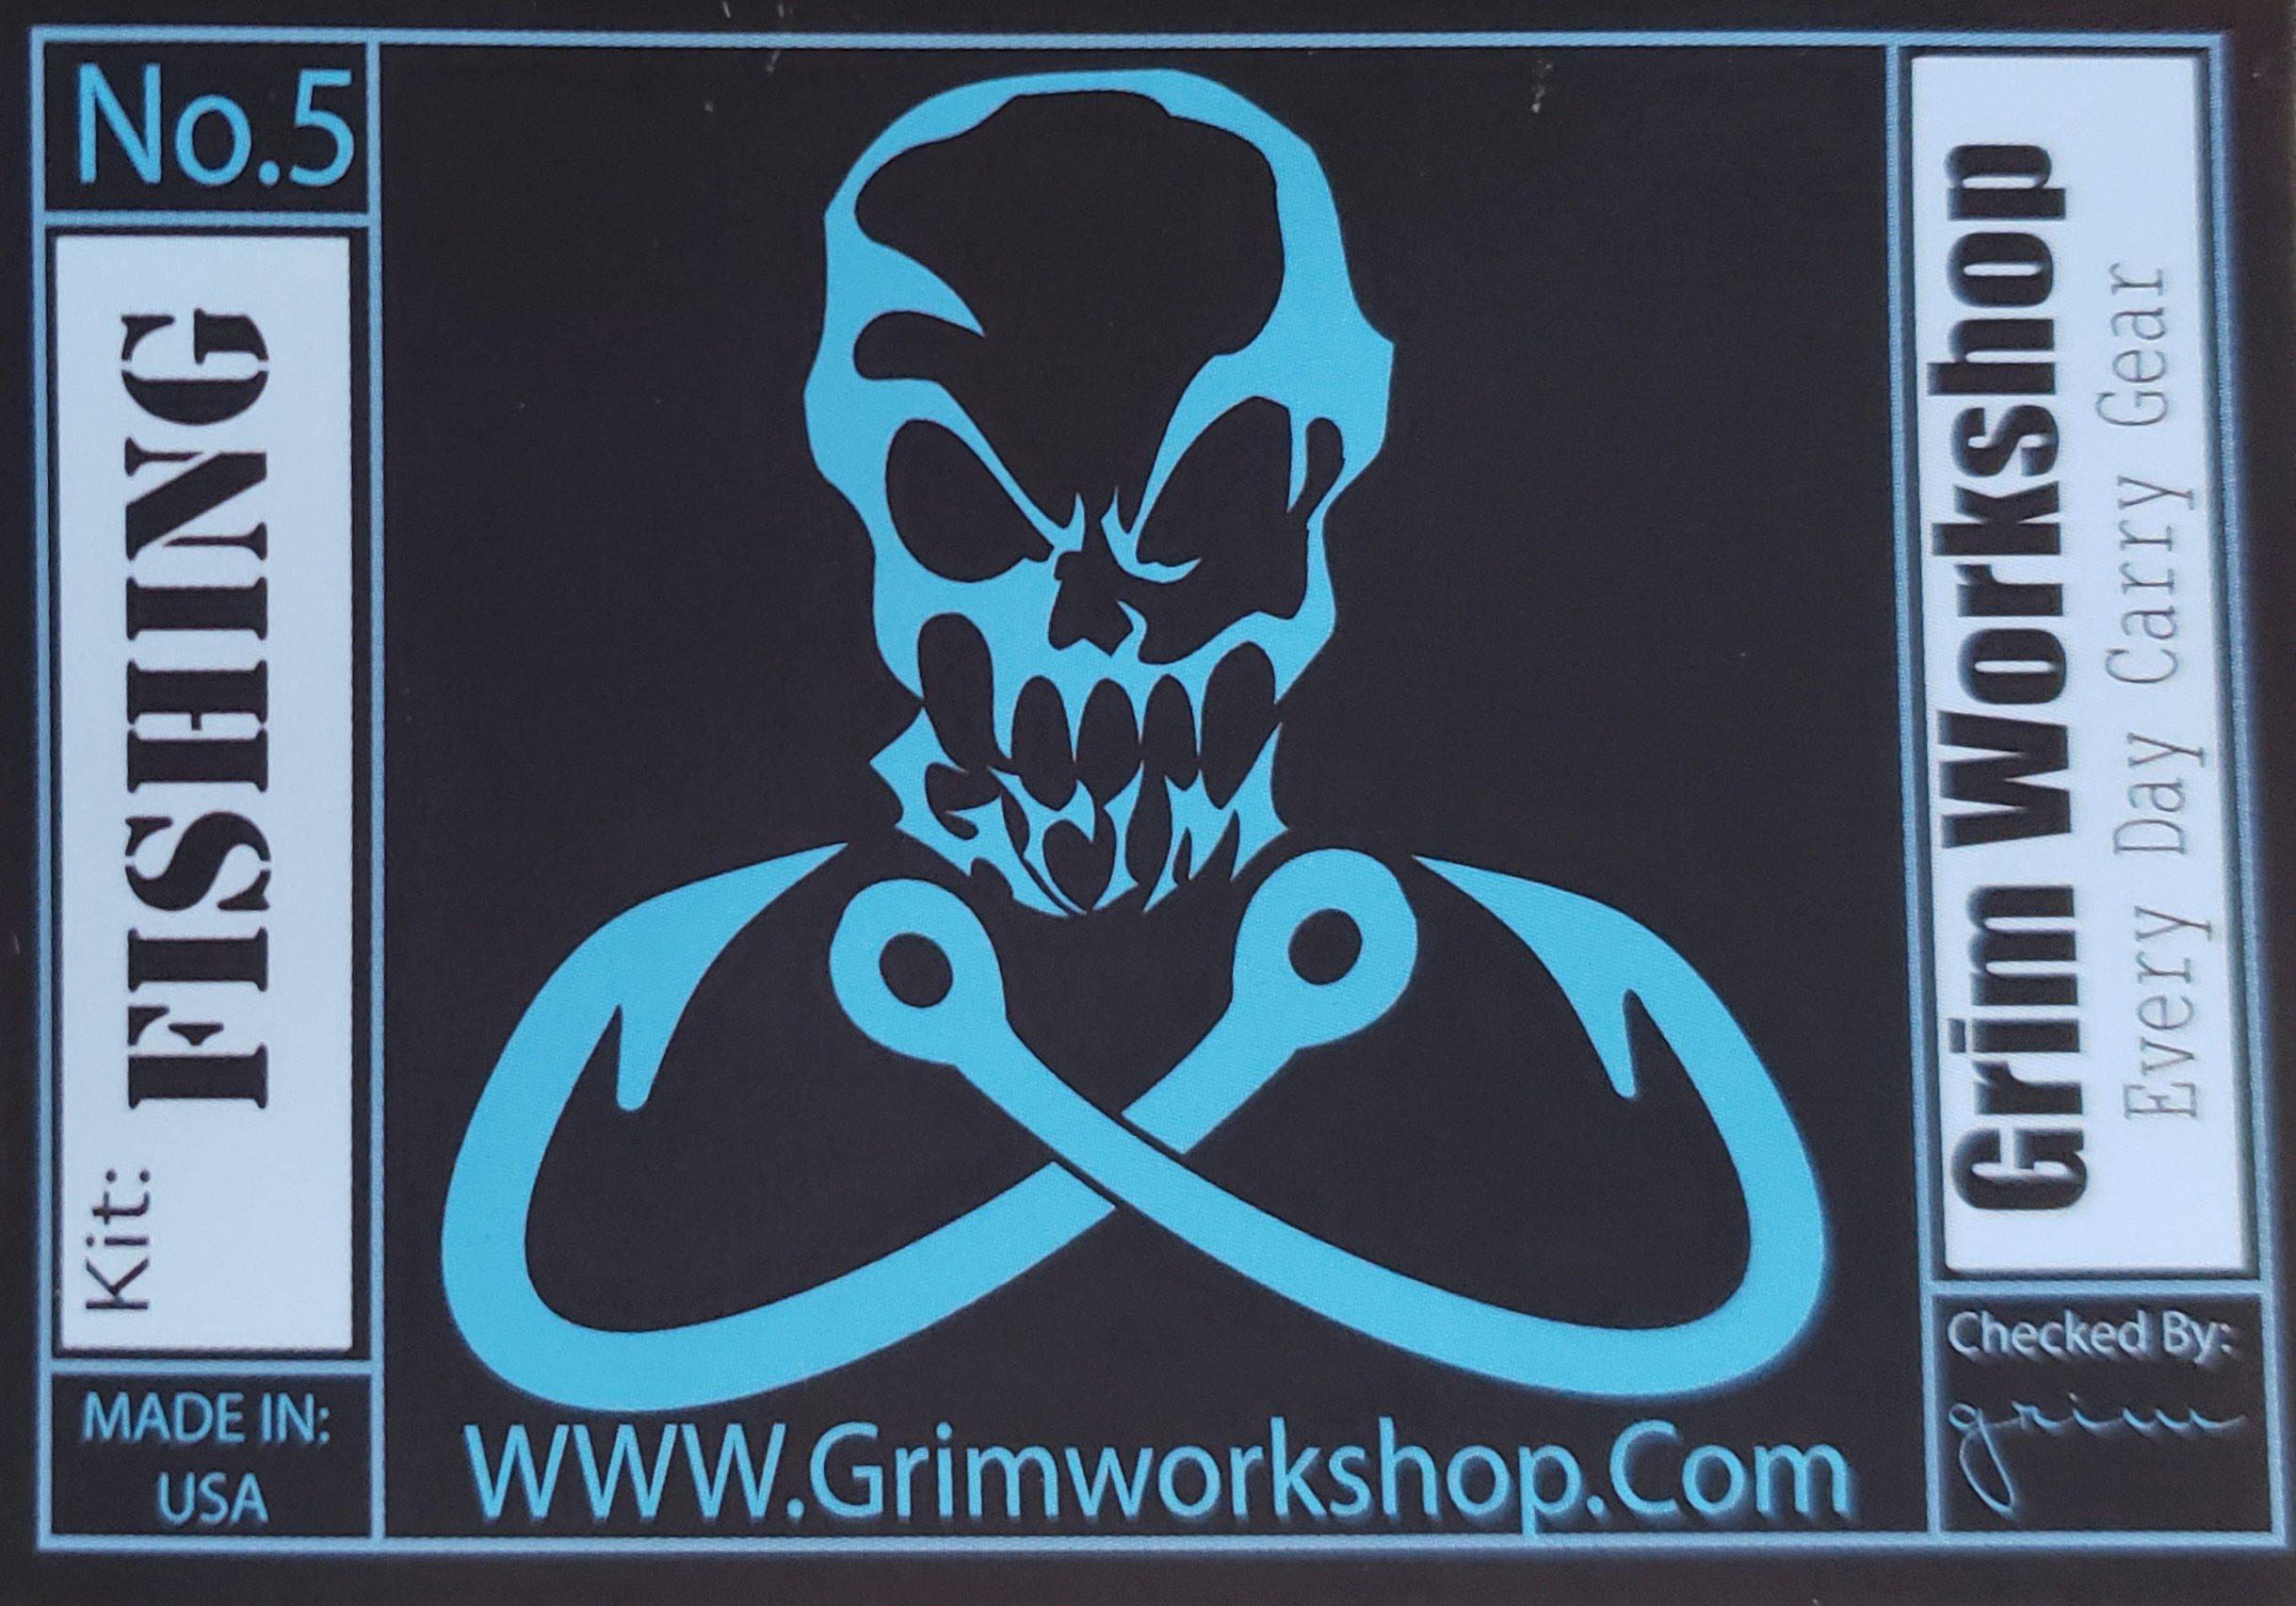 Grim Tin Fishing Kit Sticker-Grimworkshop-bugoutbag-bushcraft-edc-gear-edctool-everydaycarry-survivalcard-survivalkit-wilderness-prepping-toolkit